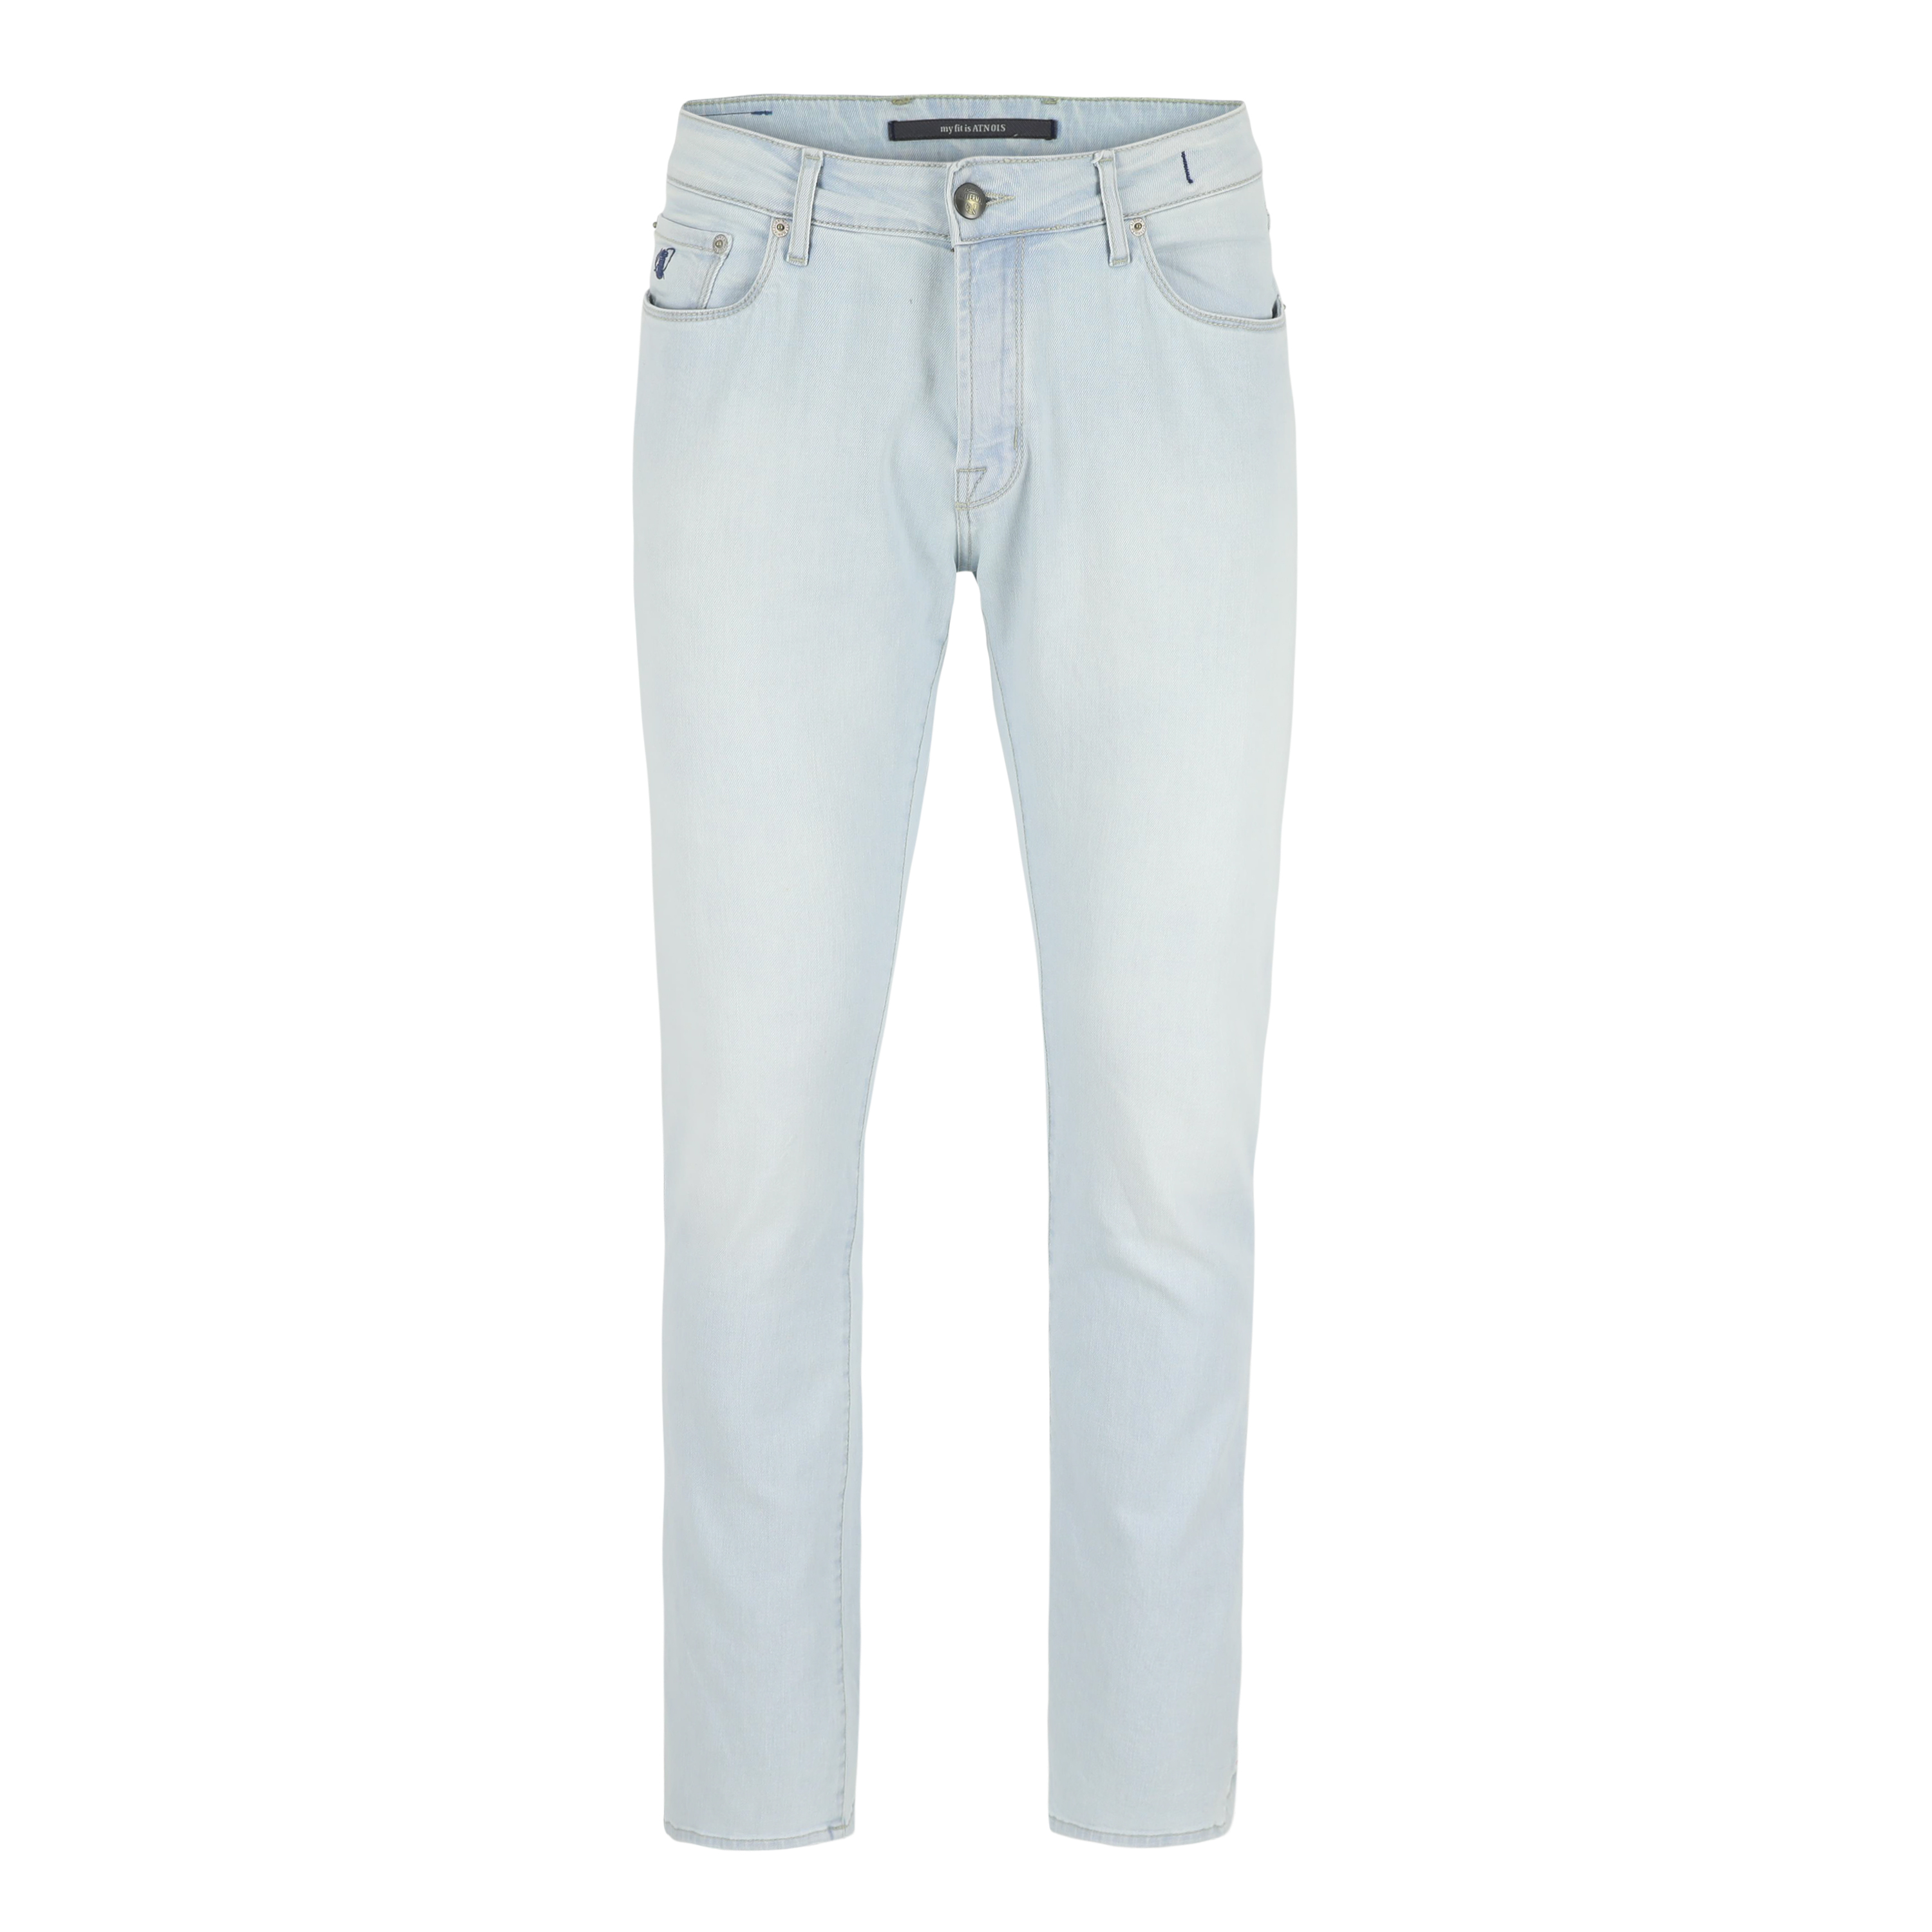 Atelier Noterman - jeans in blauwe denim in used wassing - 36/34 - Heren